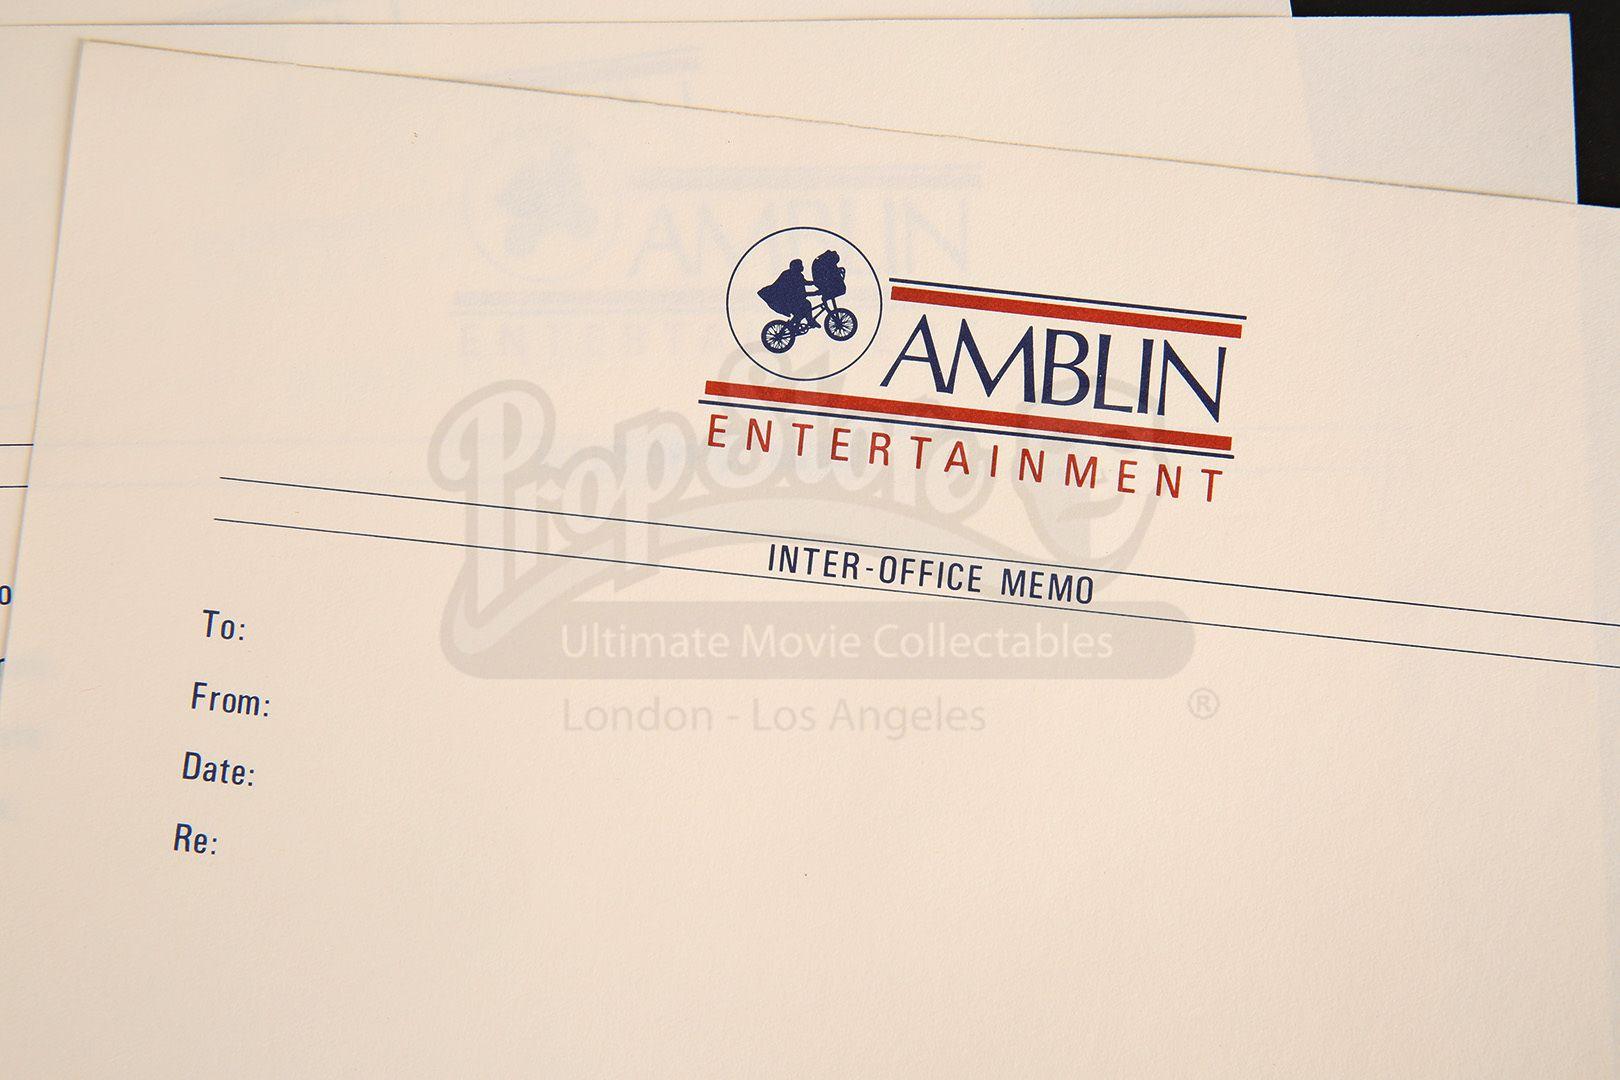 Amblin Entertainment Logo - Set of Amblin Entertainment Inter-Office Memo Sheets | Prop Store ...